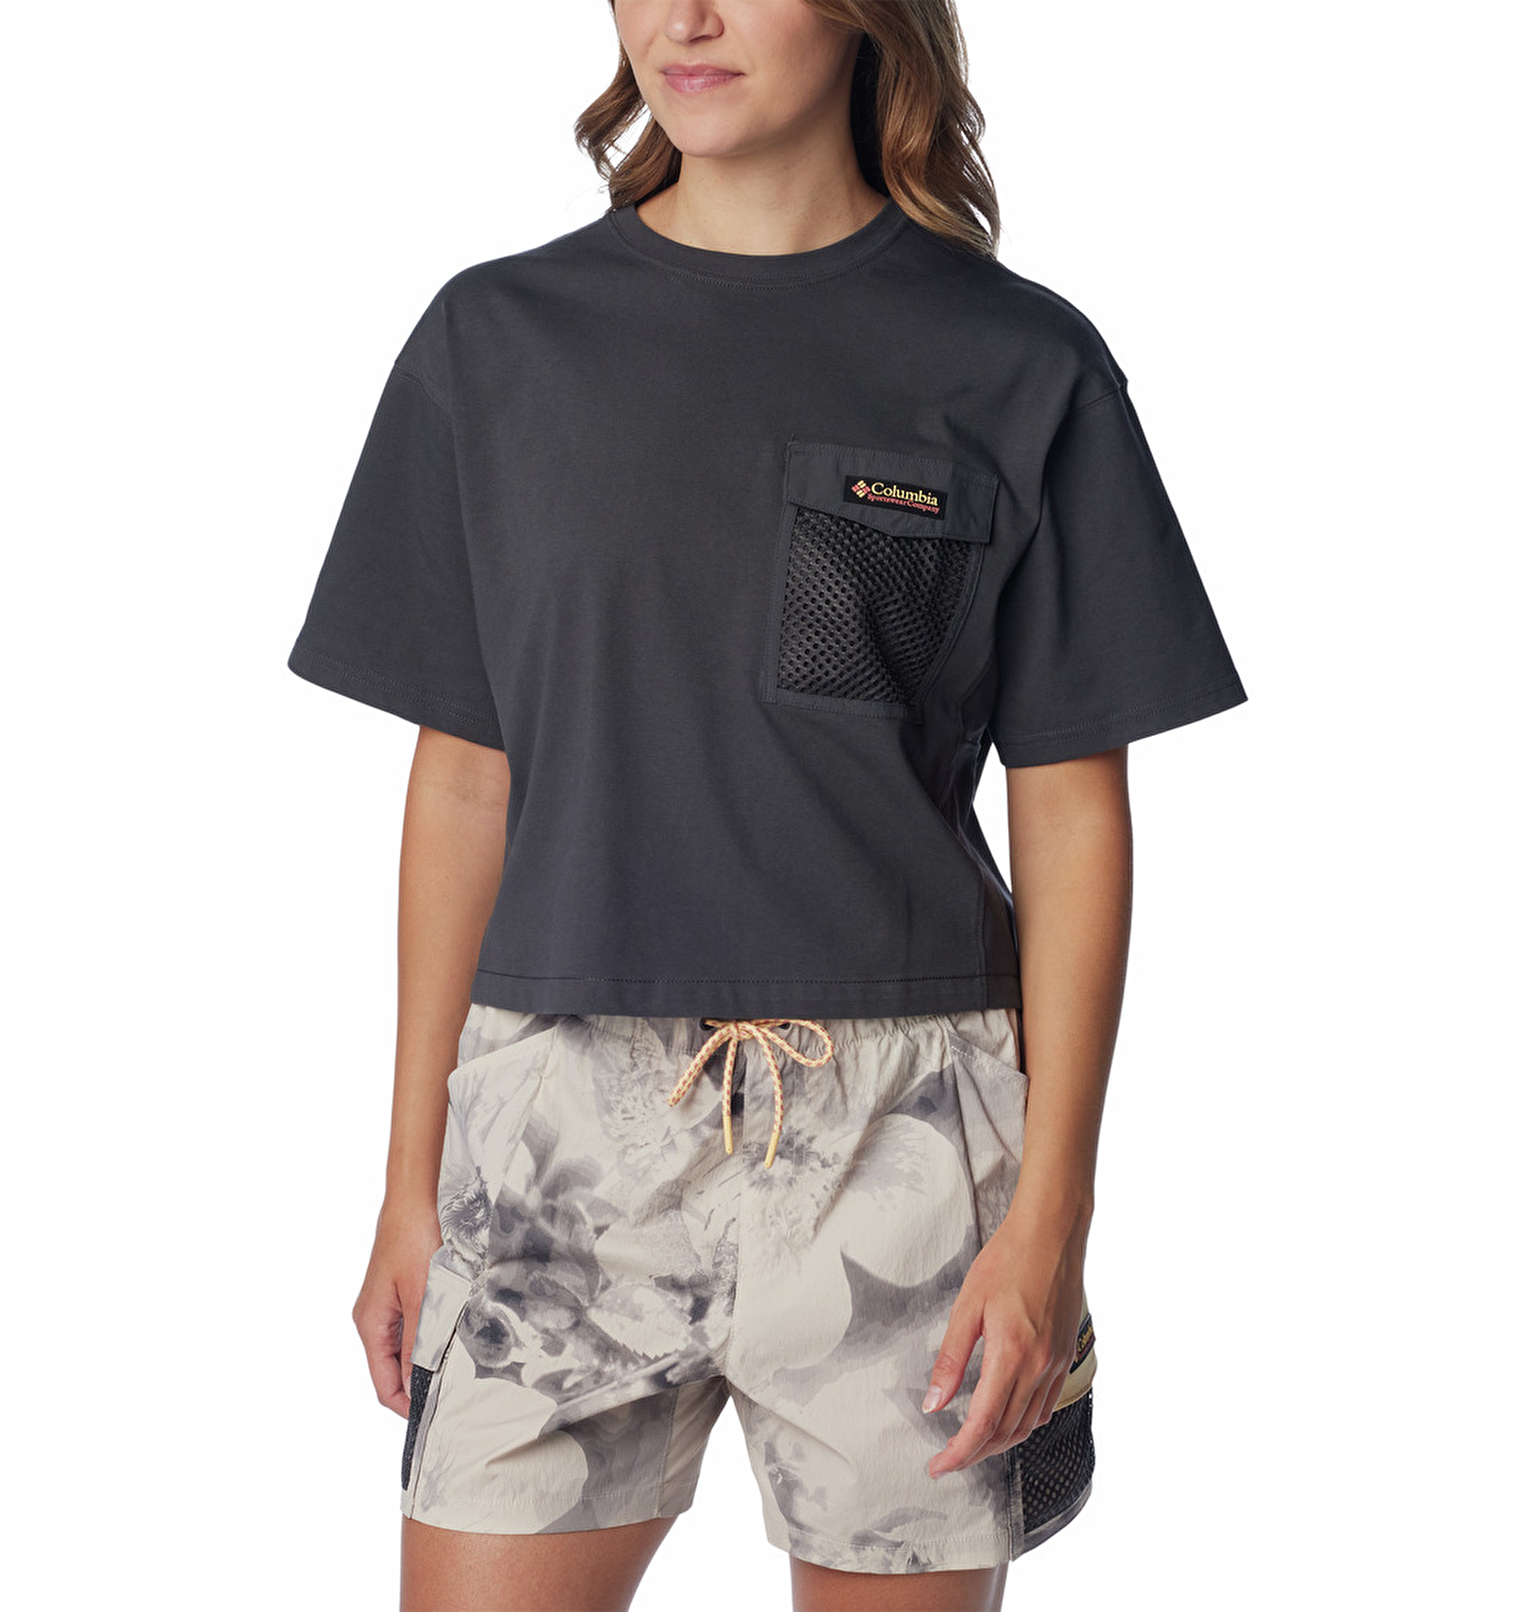 Painted Peak Knit Cropped Top Kadın Kısa Kollu T-Shirt